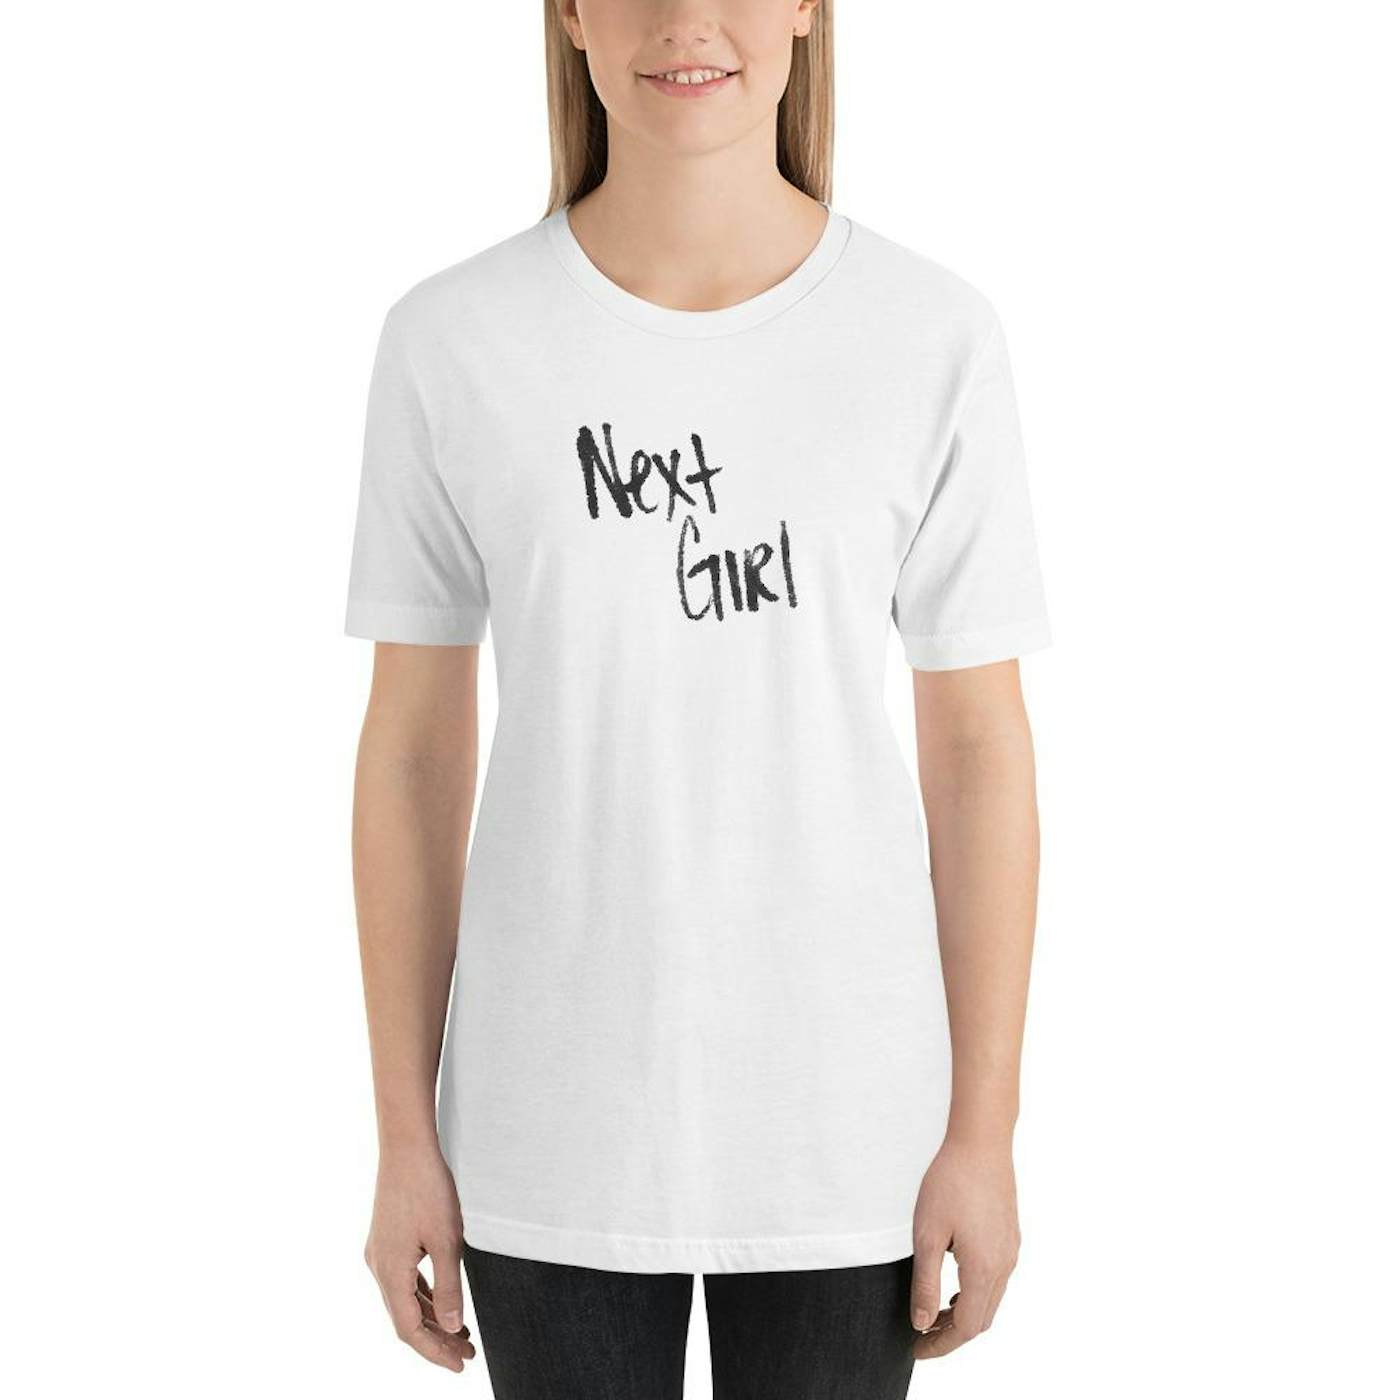 Carly Pearce - Next Girl - Unisex Short Sleeve T-Shirt